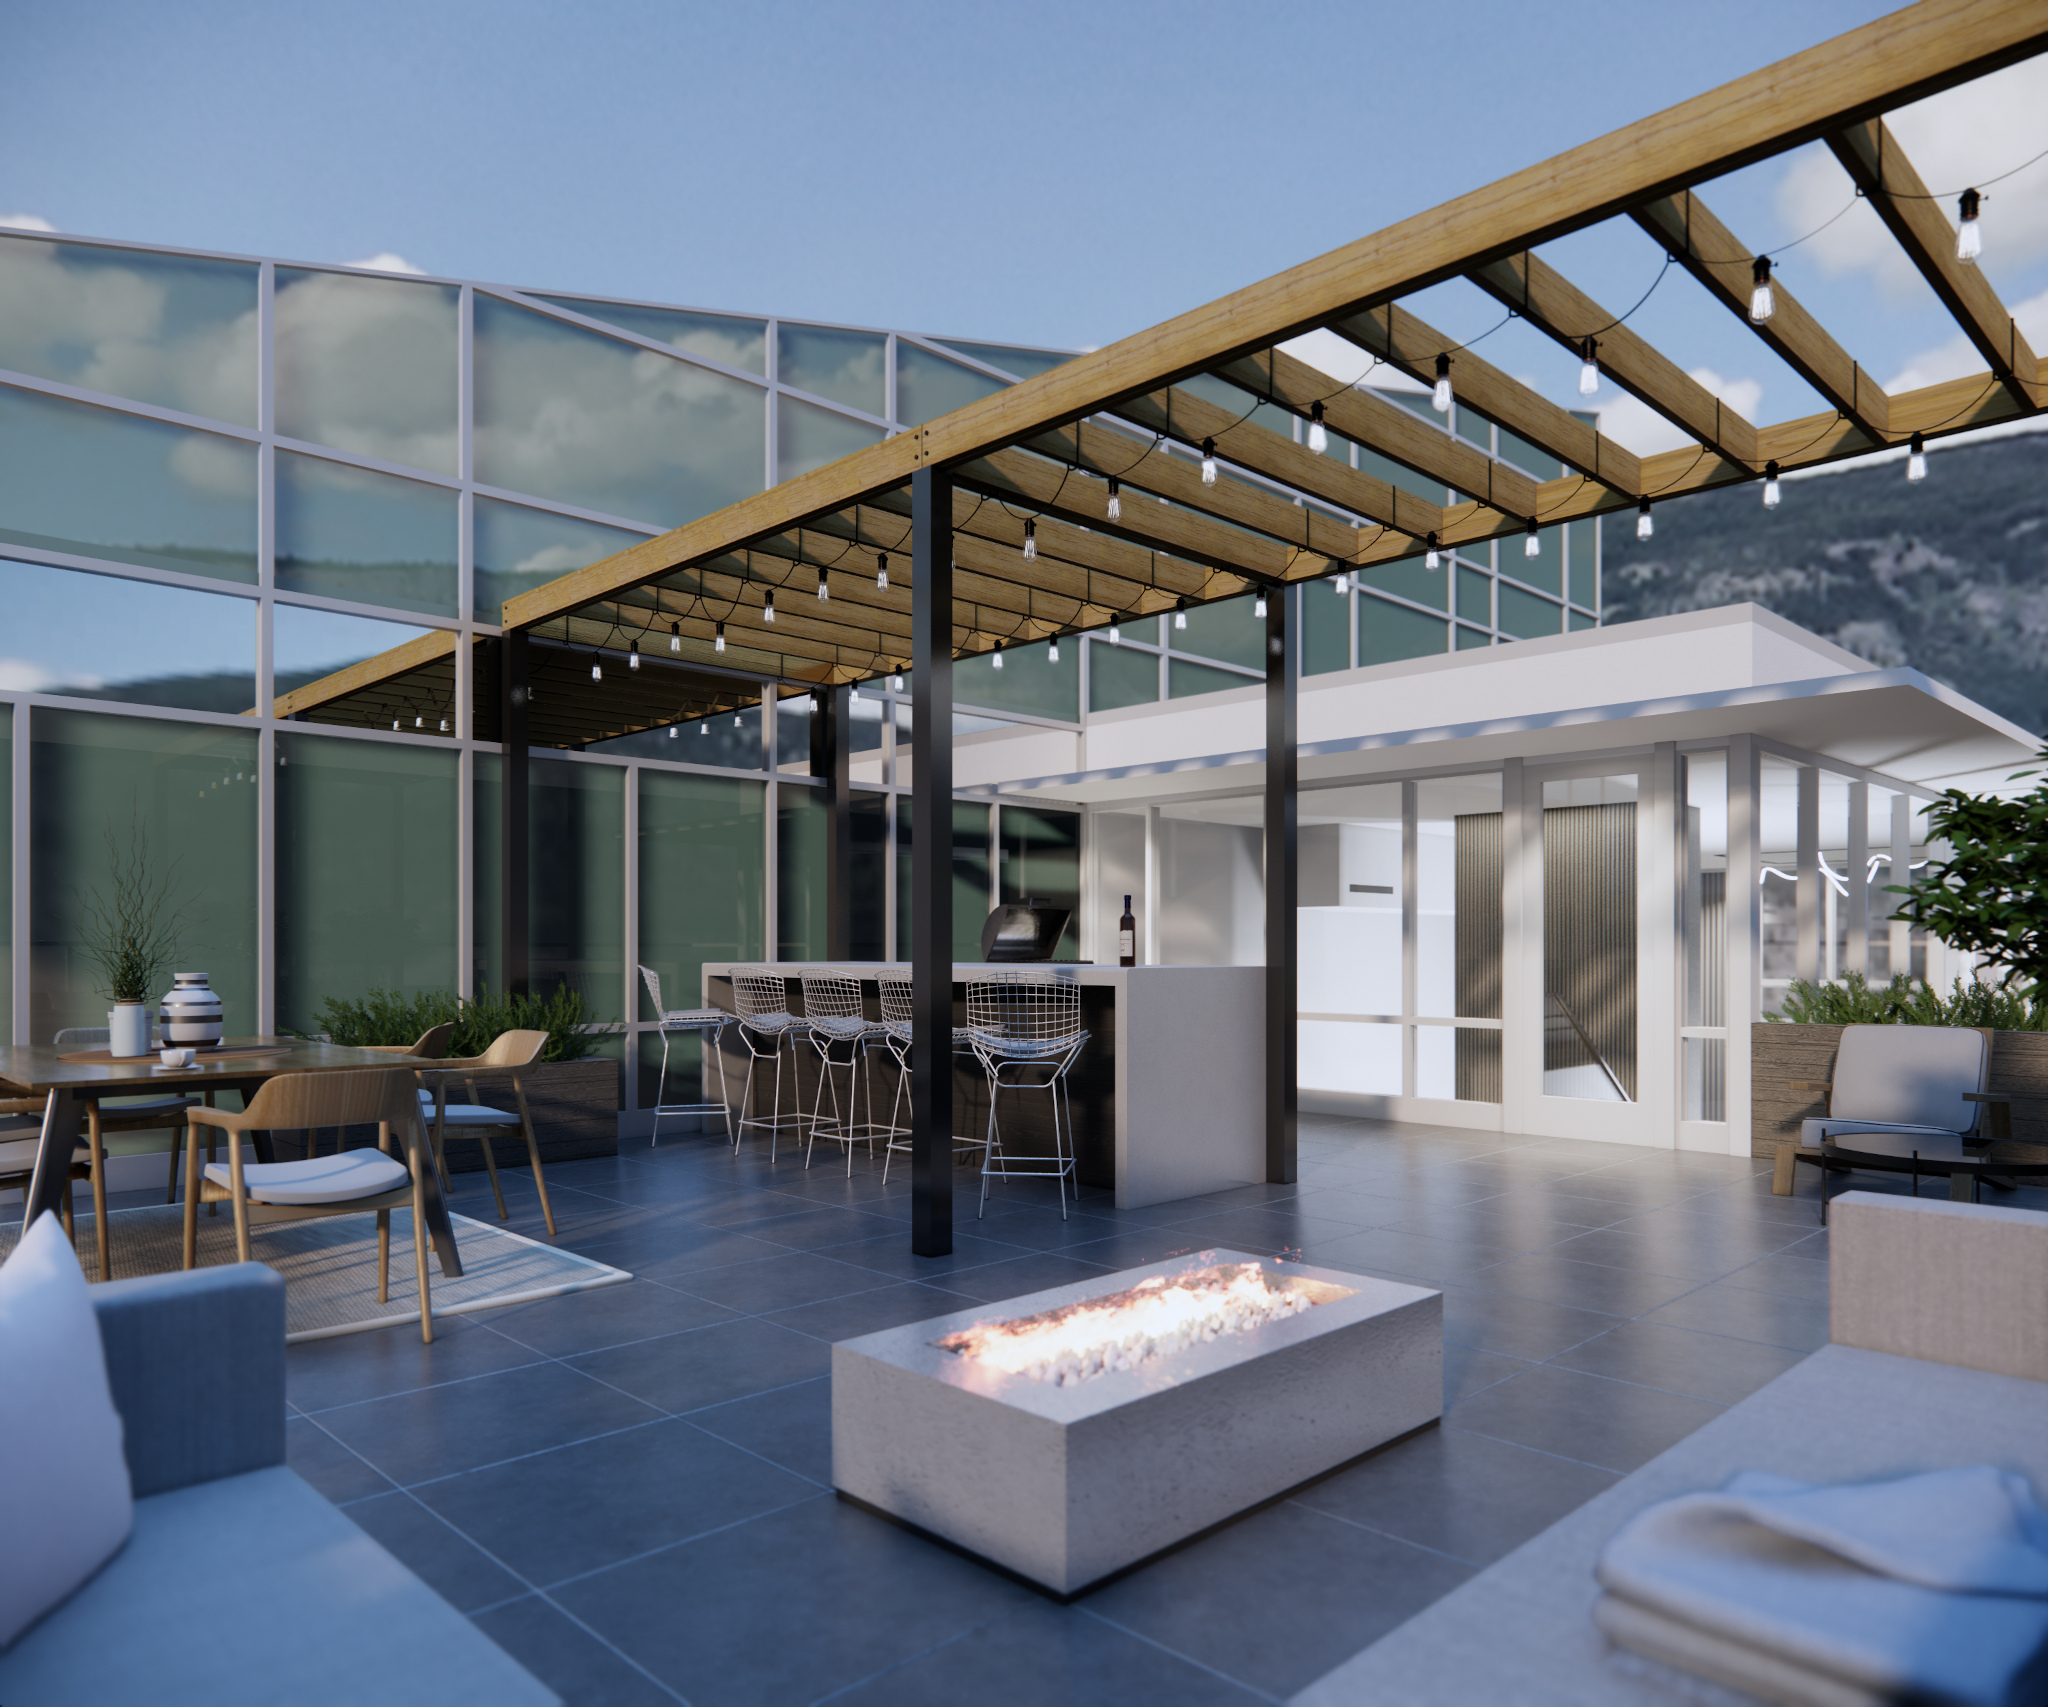 BC Penthouse Upper Deck 2 by Qub3 Studios